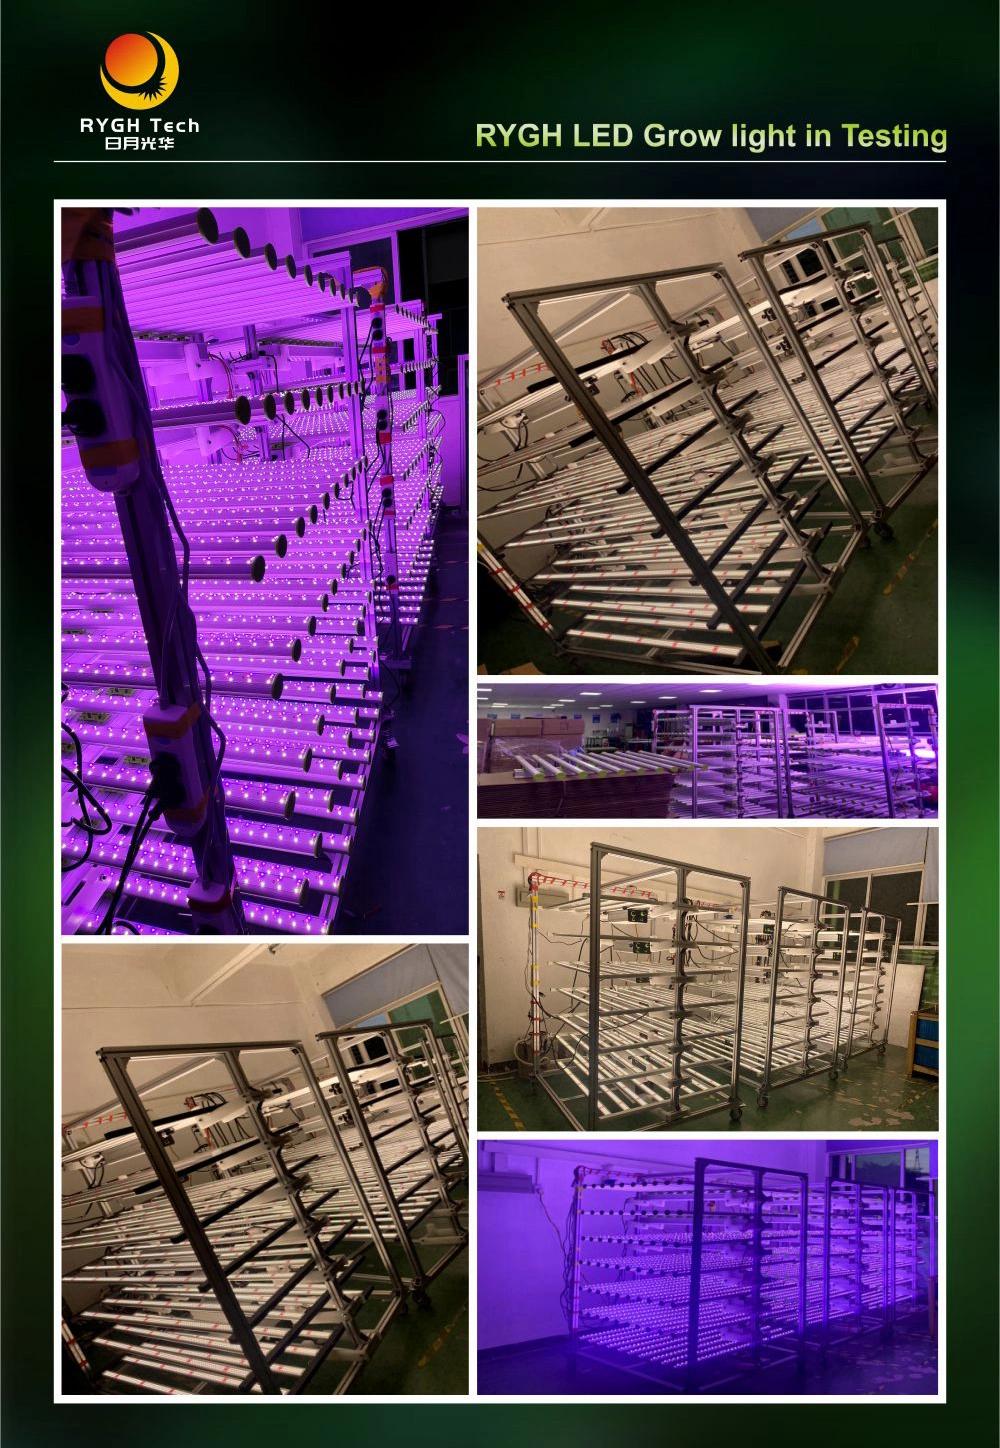 Indoor Lighting IP65 Hydro Plant 2.8 Umol/J Dimmable Full Spectrum 800W LED Grow Light